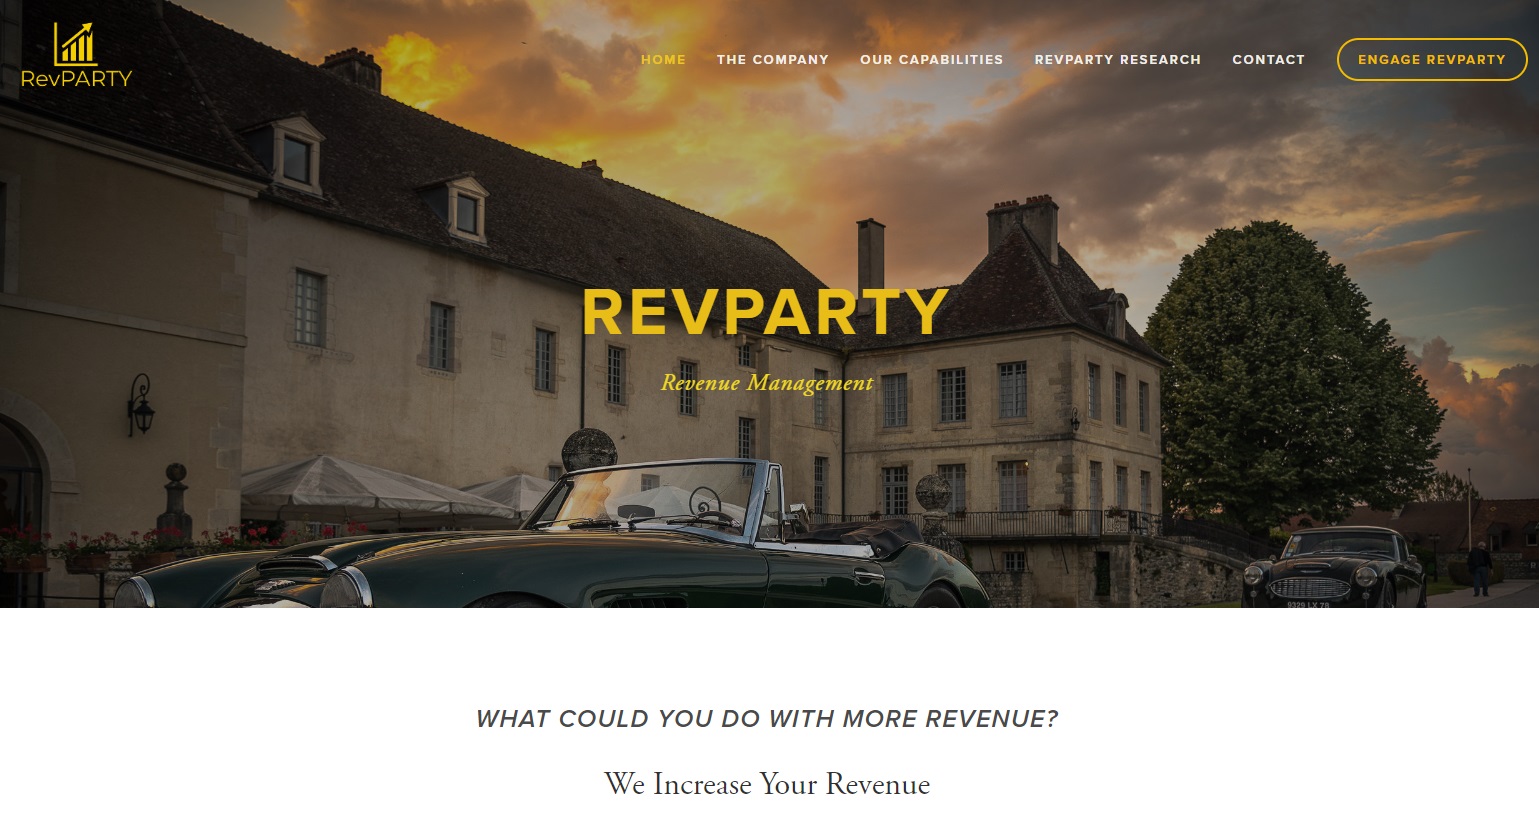  A screenshot of Jordan Locke’s company RevPARTY homepage